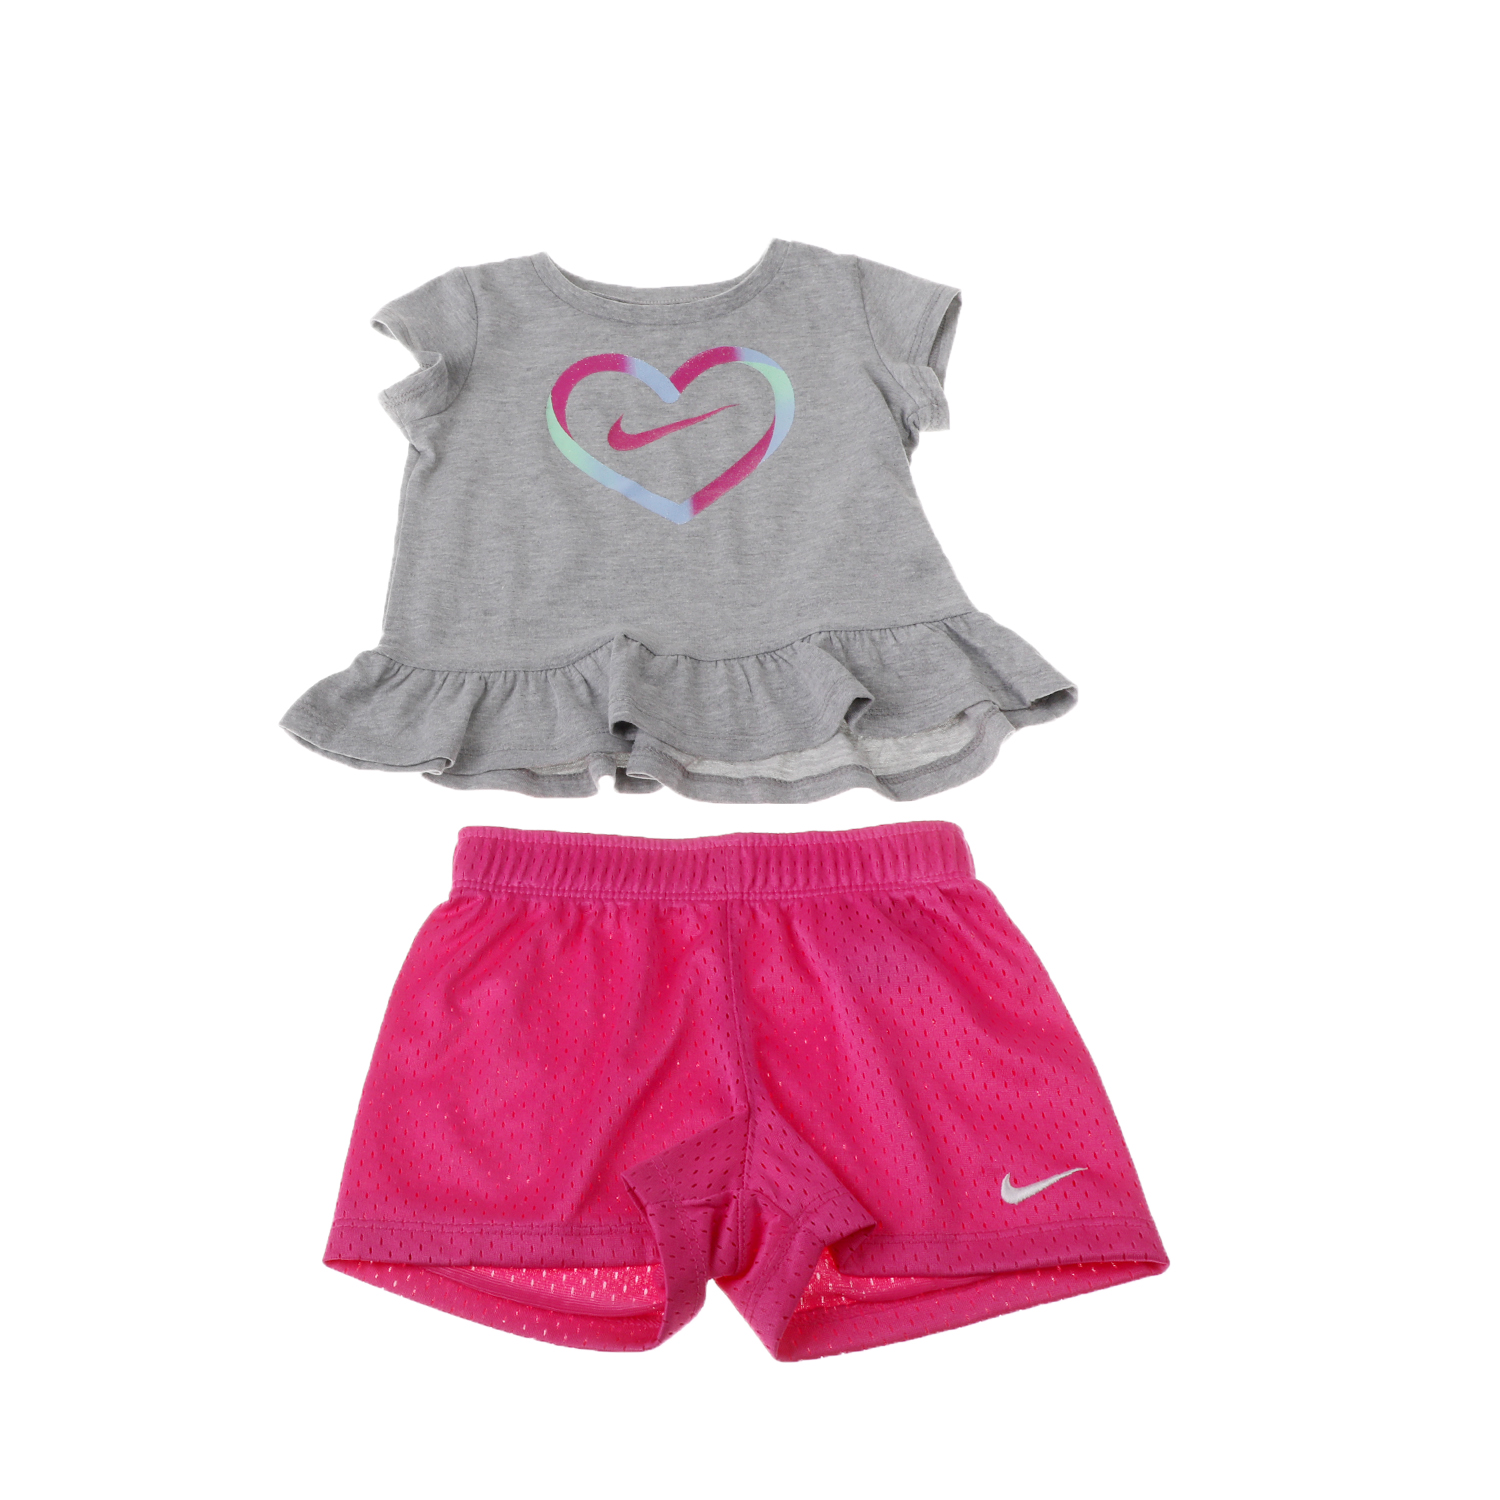 NIKE - Παιδικό σετ μπλούζα και σορτς NIKE HEART γκρι ροζ Παιδικά/Girls/Ρούχα/Σετ